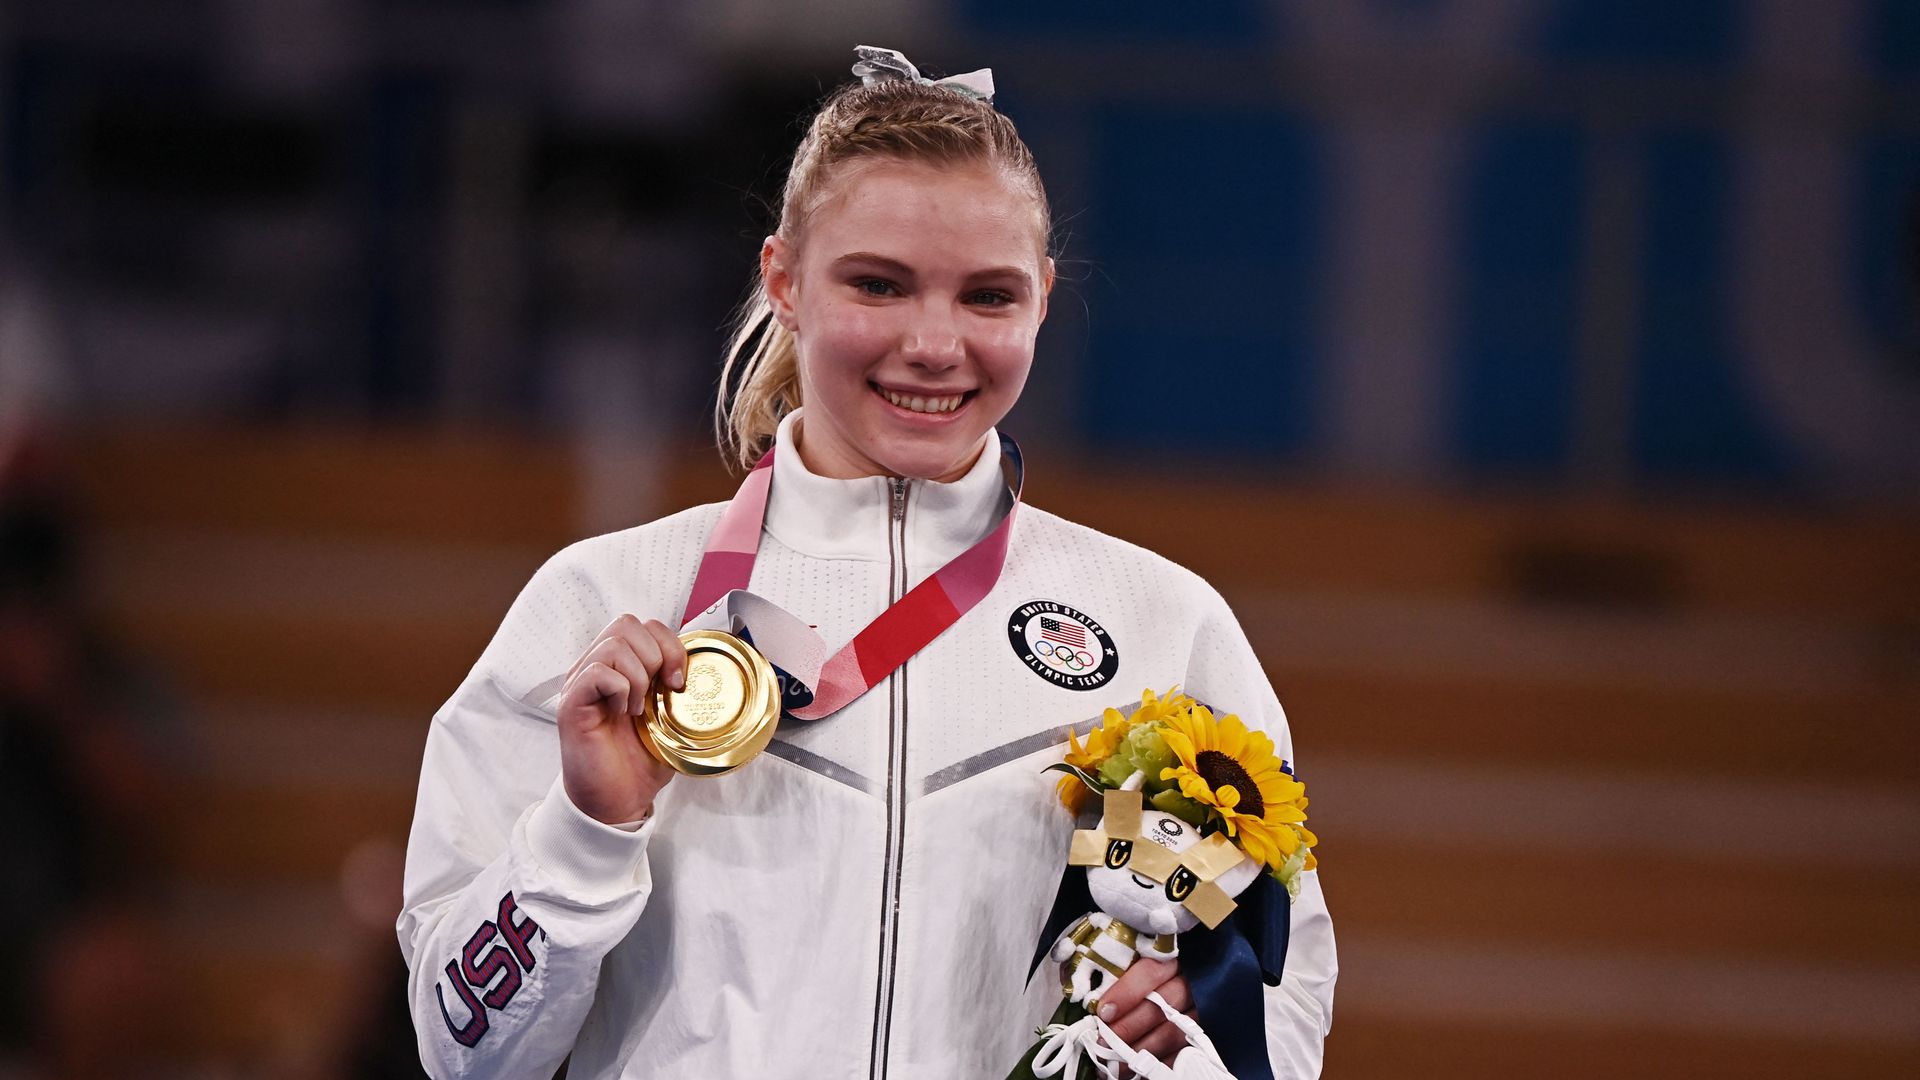 U.S. gymnast Jade Carey wins Olympic gold in floor exercise final